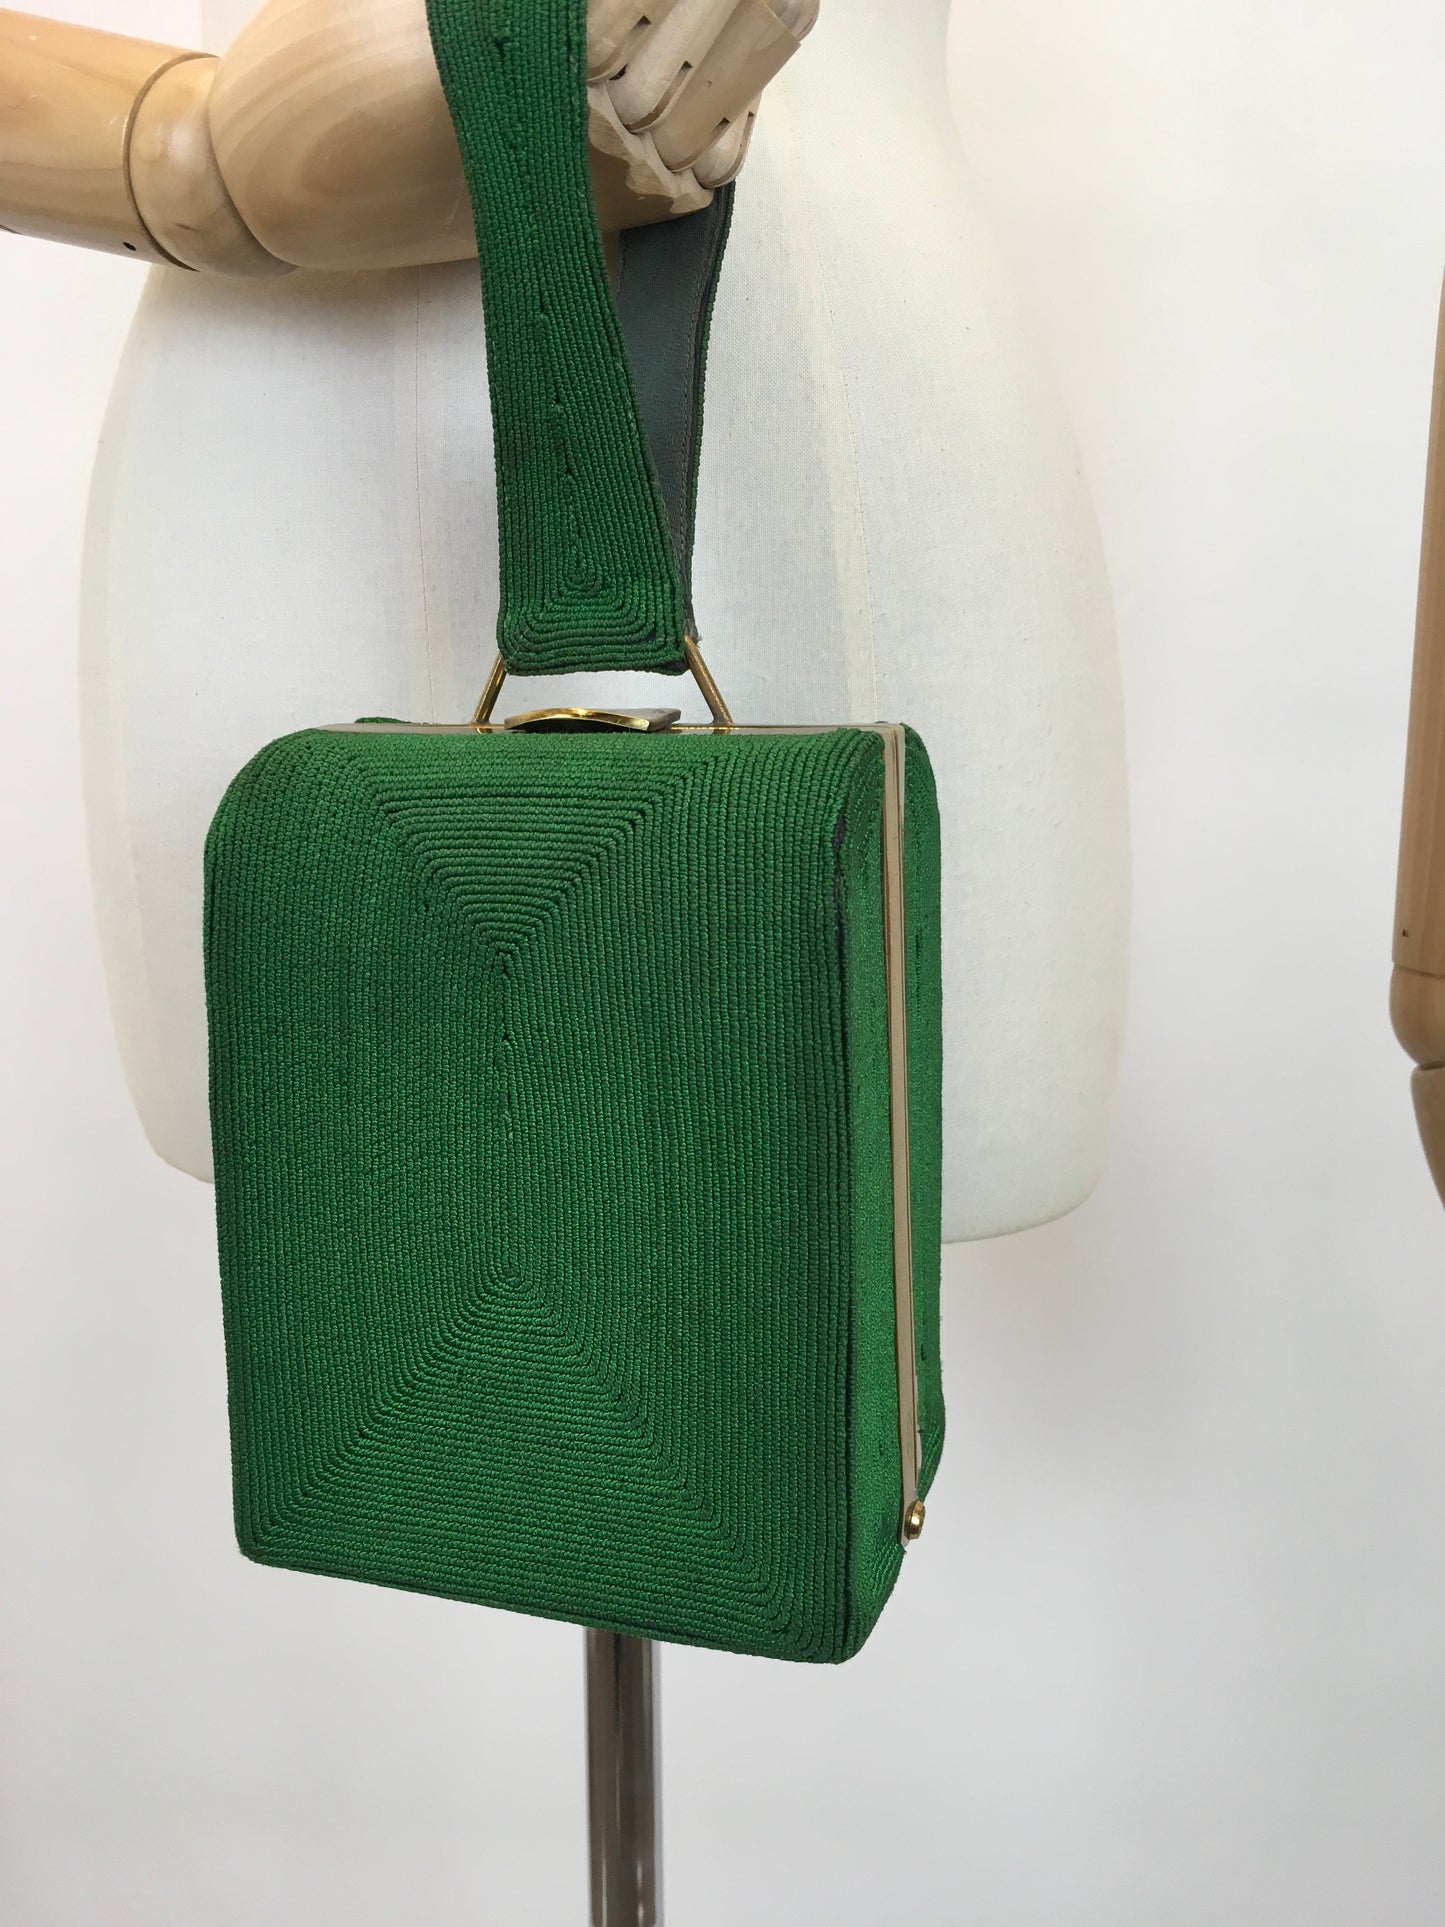 Original 1940's Sensational Rare Corde Handbag - In Emerald Green